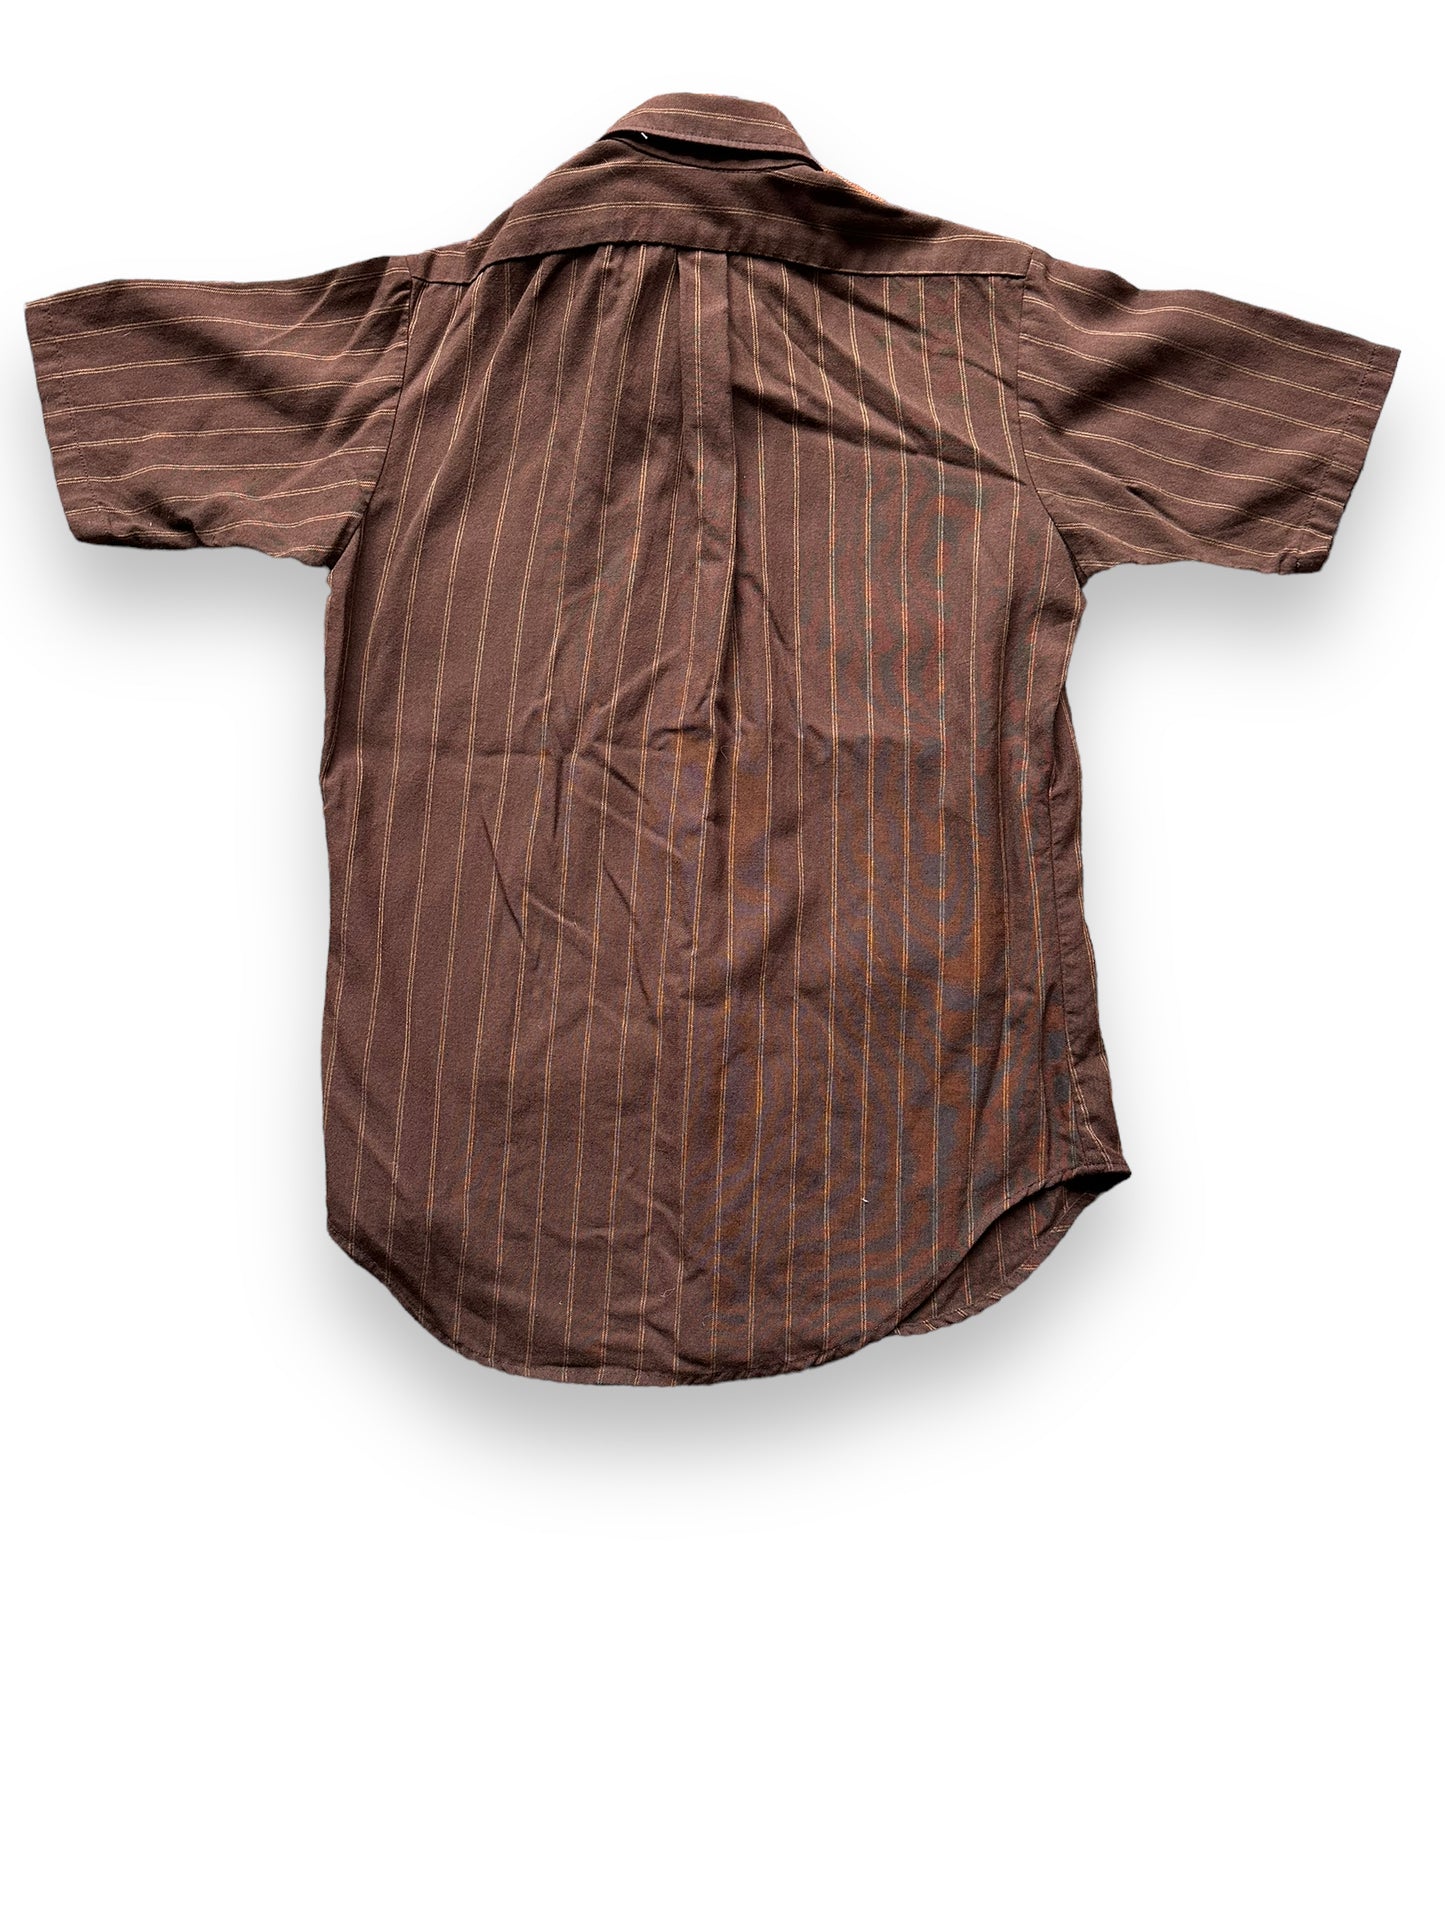 Rear View of Vintage Davinci Brown Stripe Short Sleeve Button Up Shirt SZ M | Vintage Button Up Shirt Seattle | Barn Owl Vintage Seattle